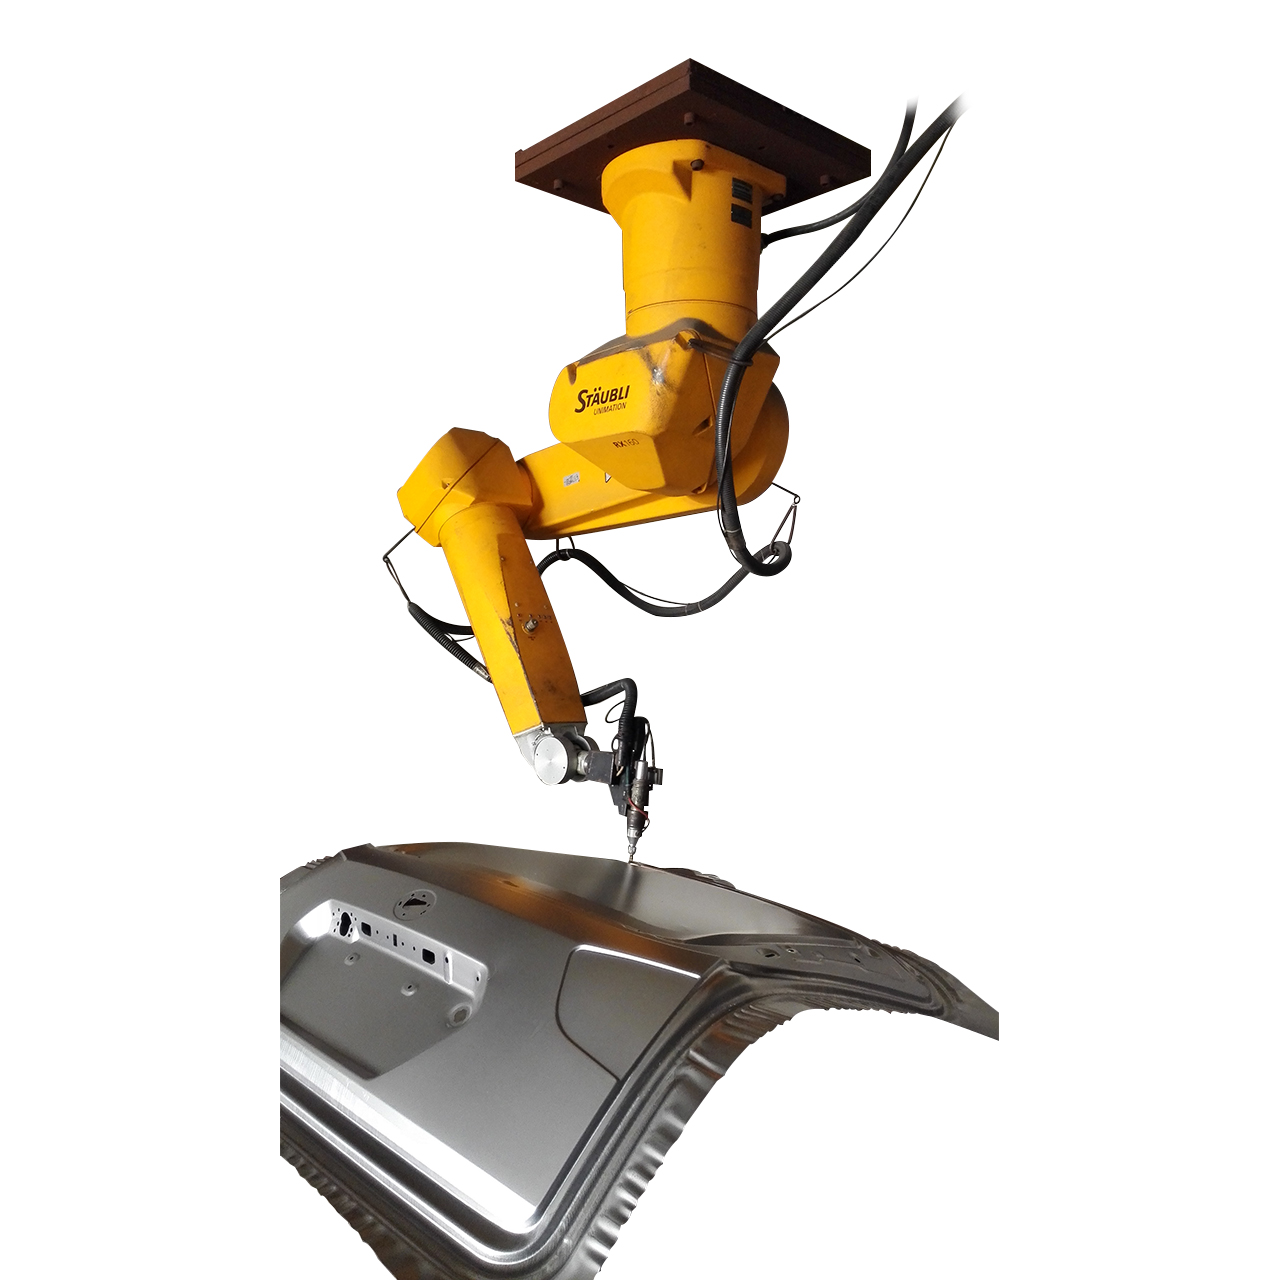 Three dimensional cutting of stobil robot